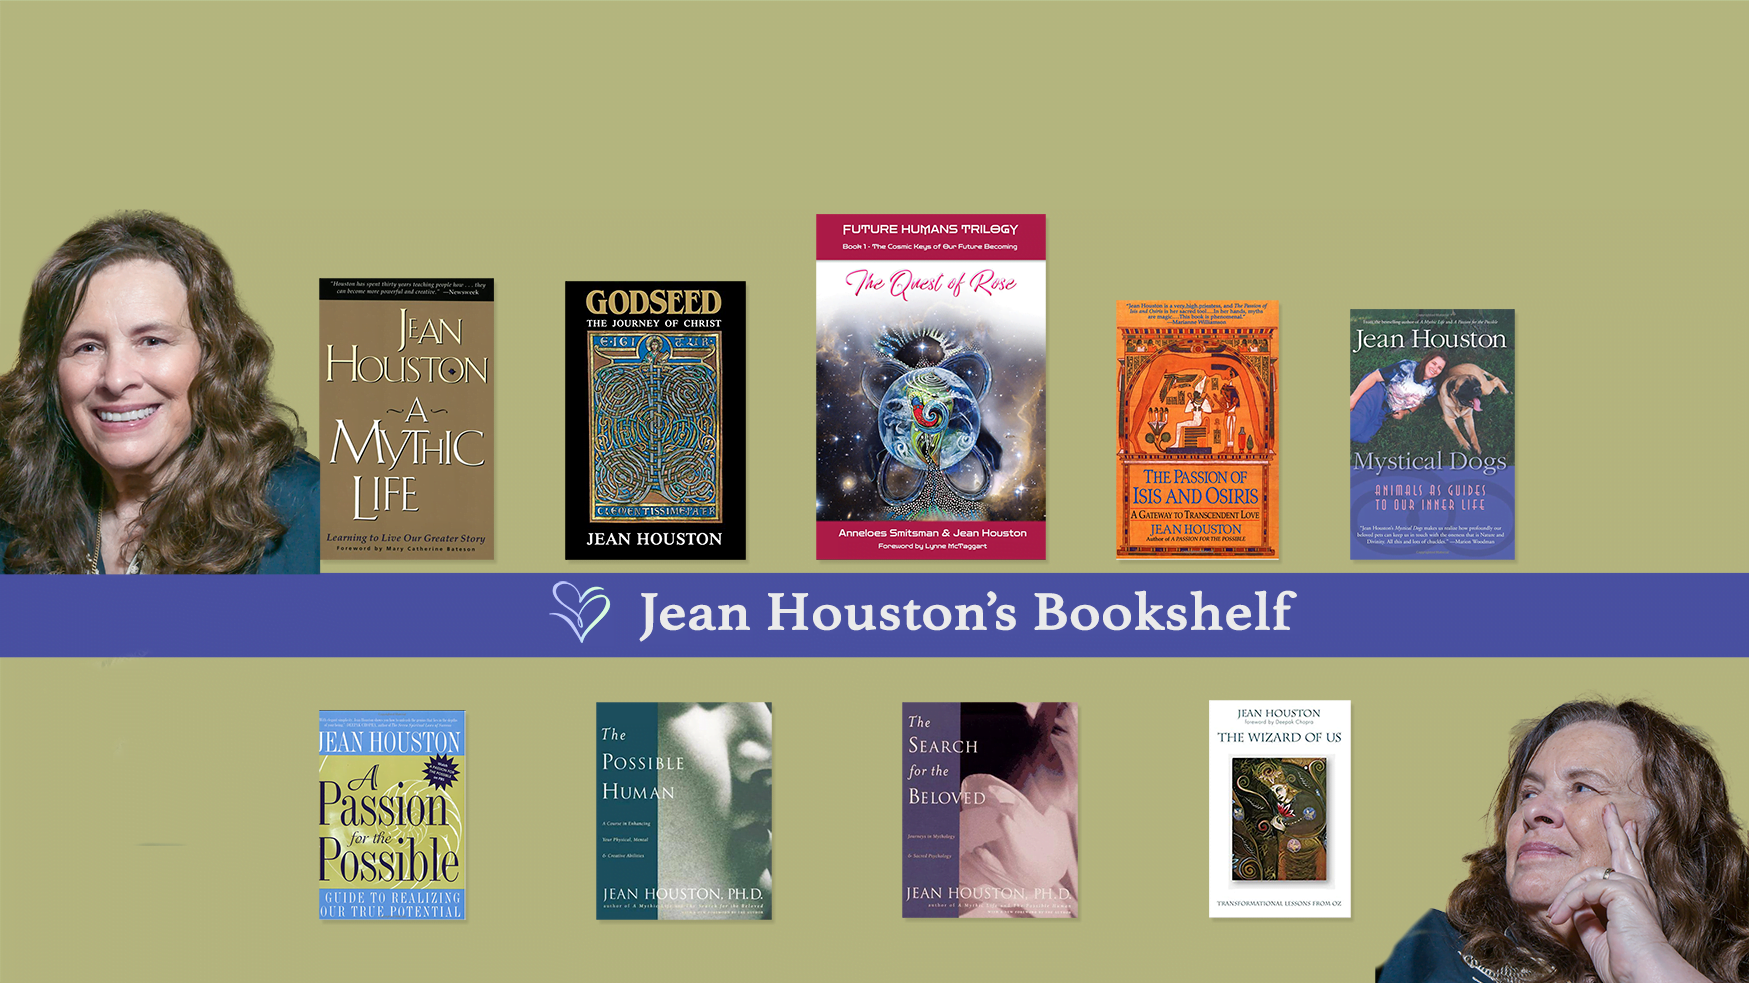 Jean Houston's Bookshelf